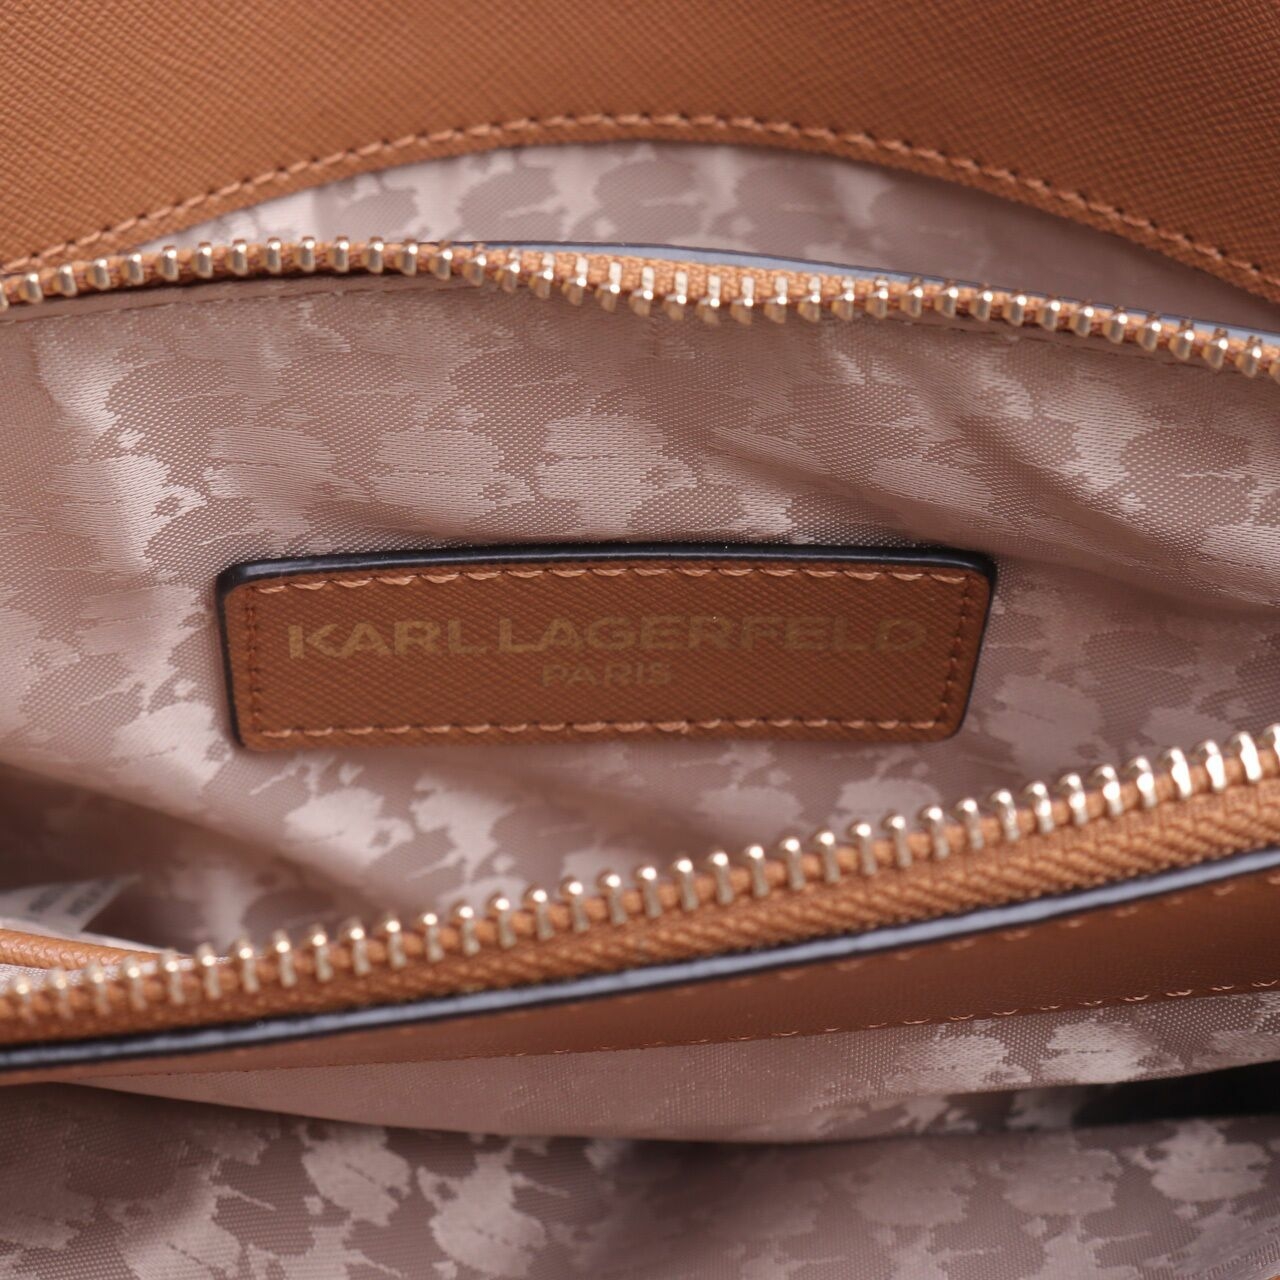 Karl Lagerfeld Iris Signature Triple Entry Almon Taupe Crossbody Bag